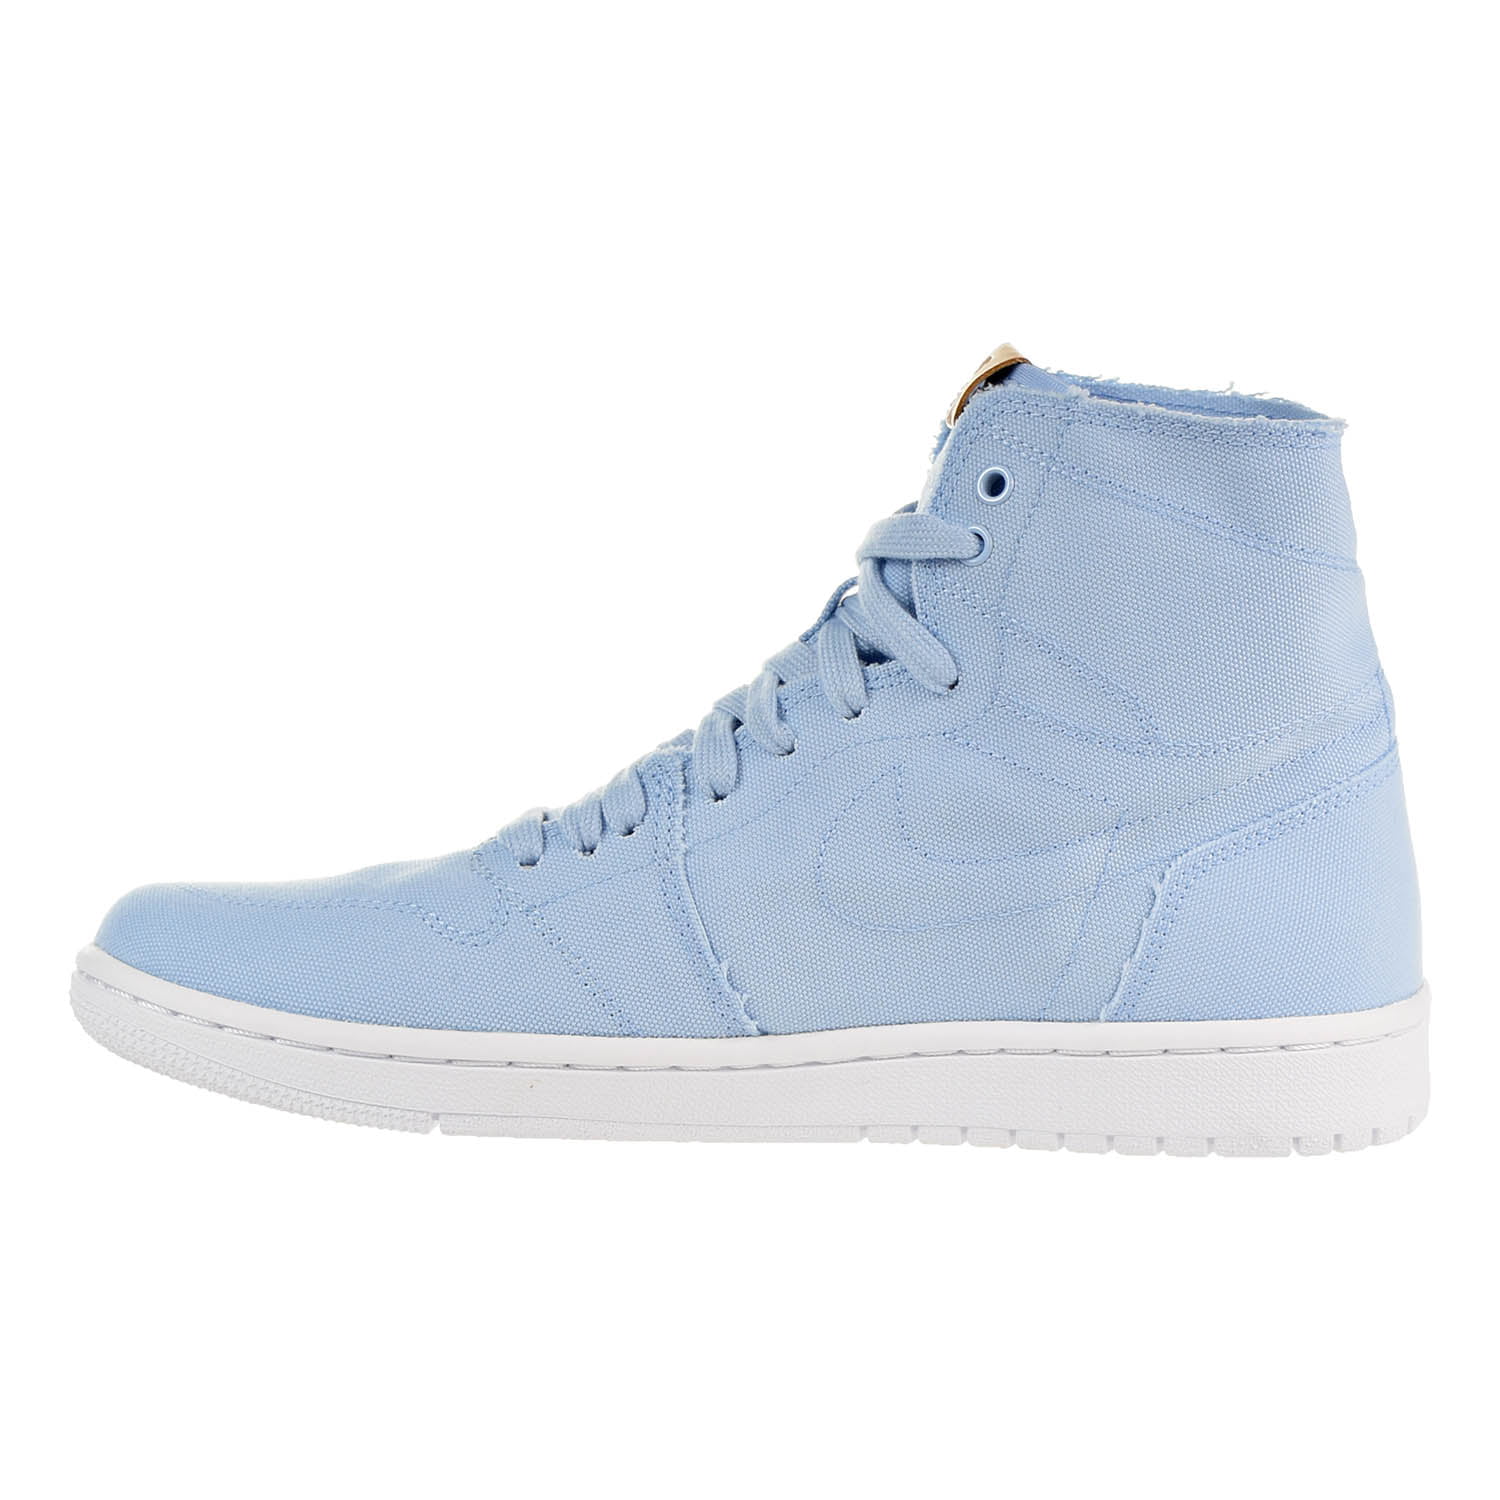 Air Jordan 1 Retro High Decon Men's Shoes Ice Blue/White/Vachetta Tan  867338-425 (8.5 D(M) US)